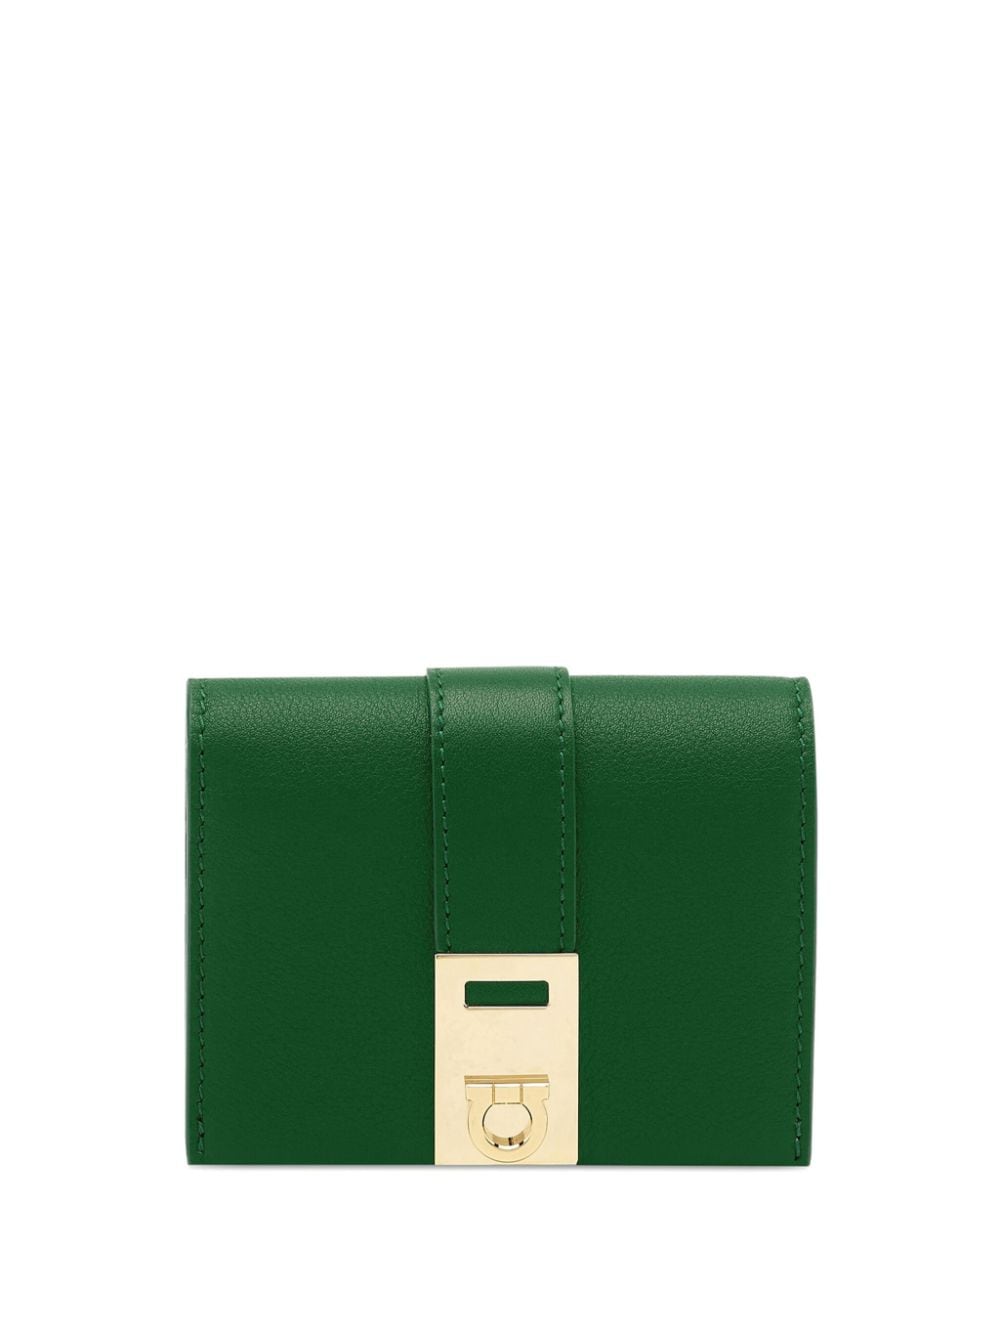 Ferragamo Hug leather wallet - Verde